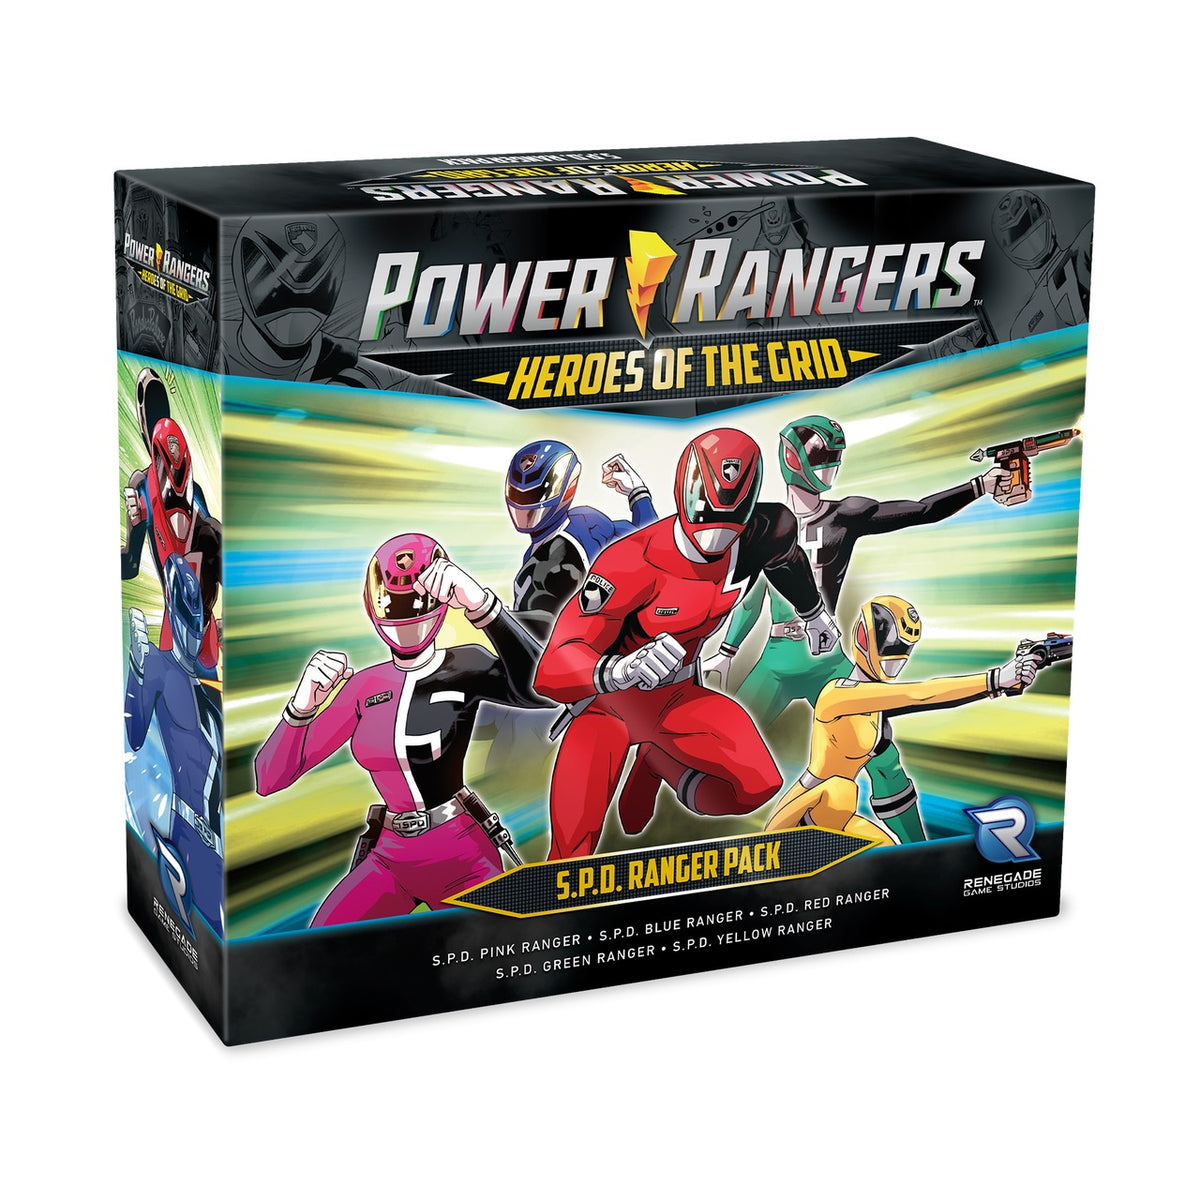 Power Rangers Heroes of the Grid S.P.D. Ranger Pack (Preorder)